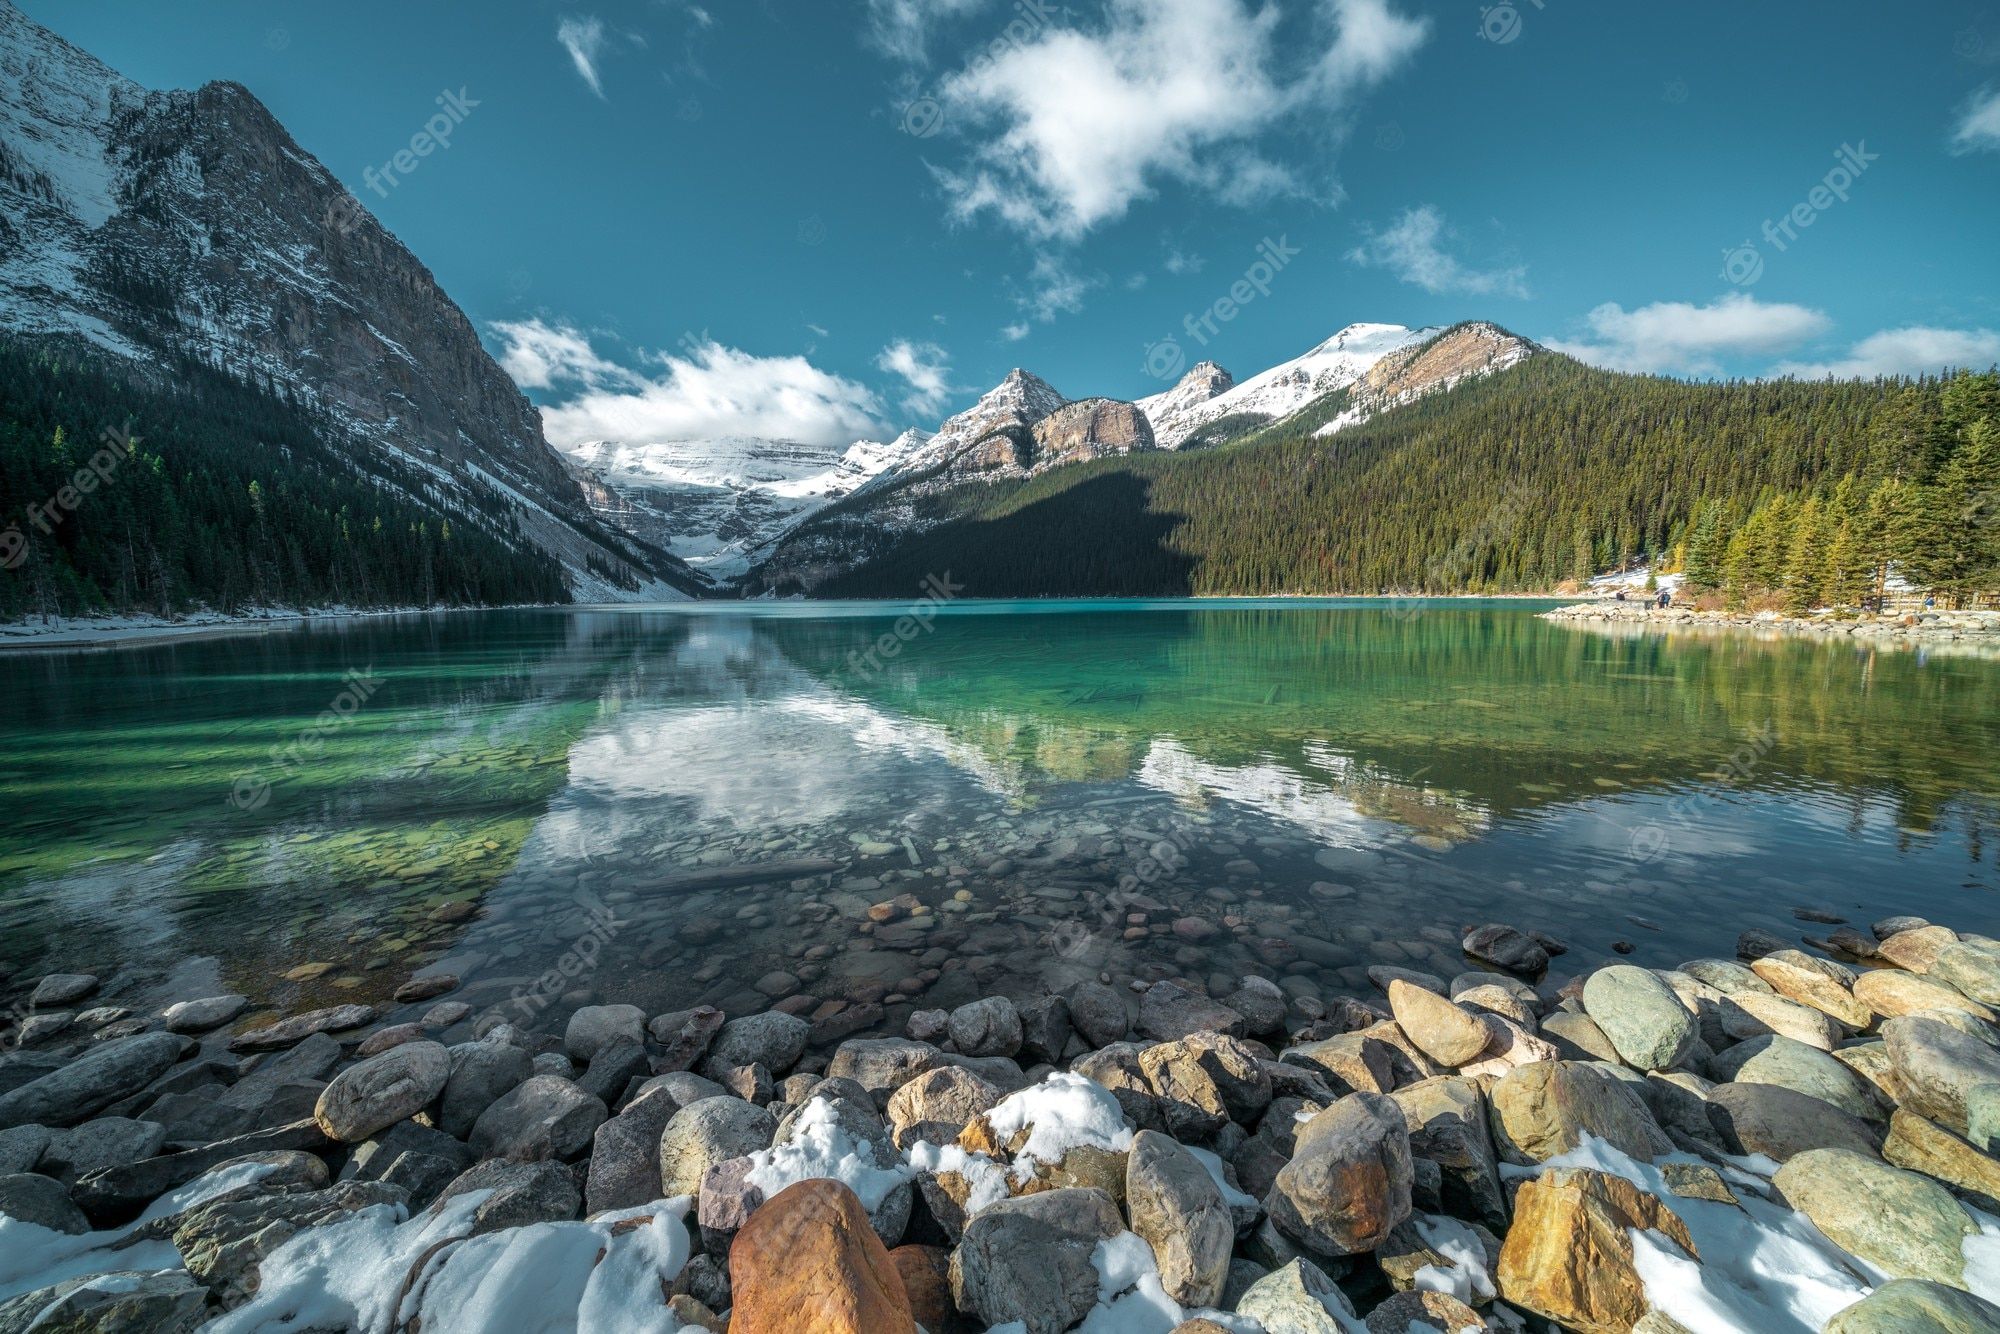  Alpen Hintergrundbild 2000x1334. Fotos Wallpaper, Über 92.000 hochqualitative kostenlose Stockfotos